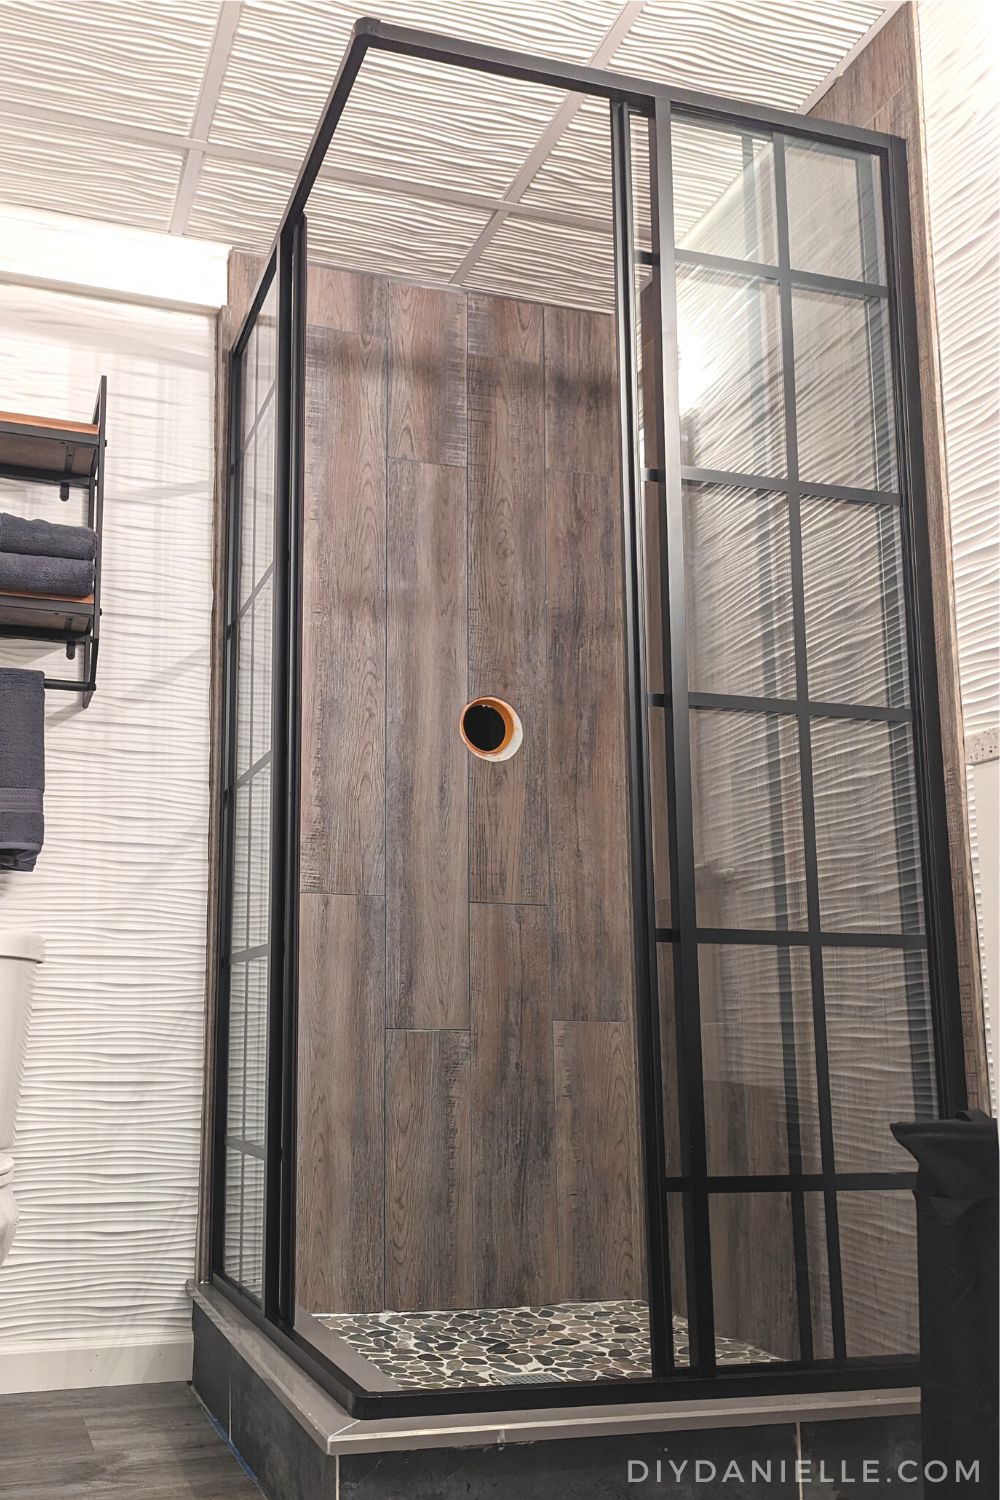 Dreamline Shower Doors Installation - DIY Danielle®